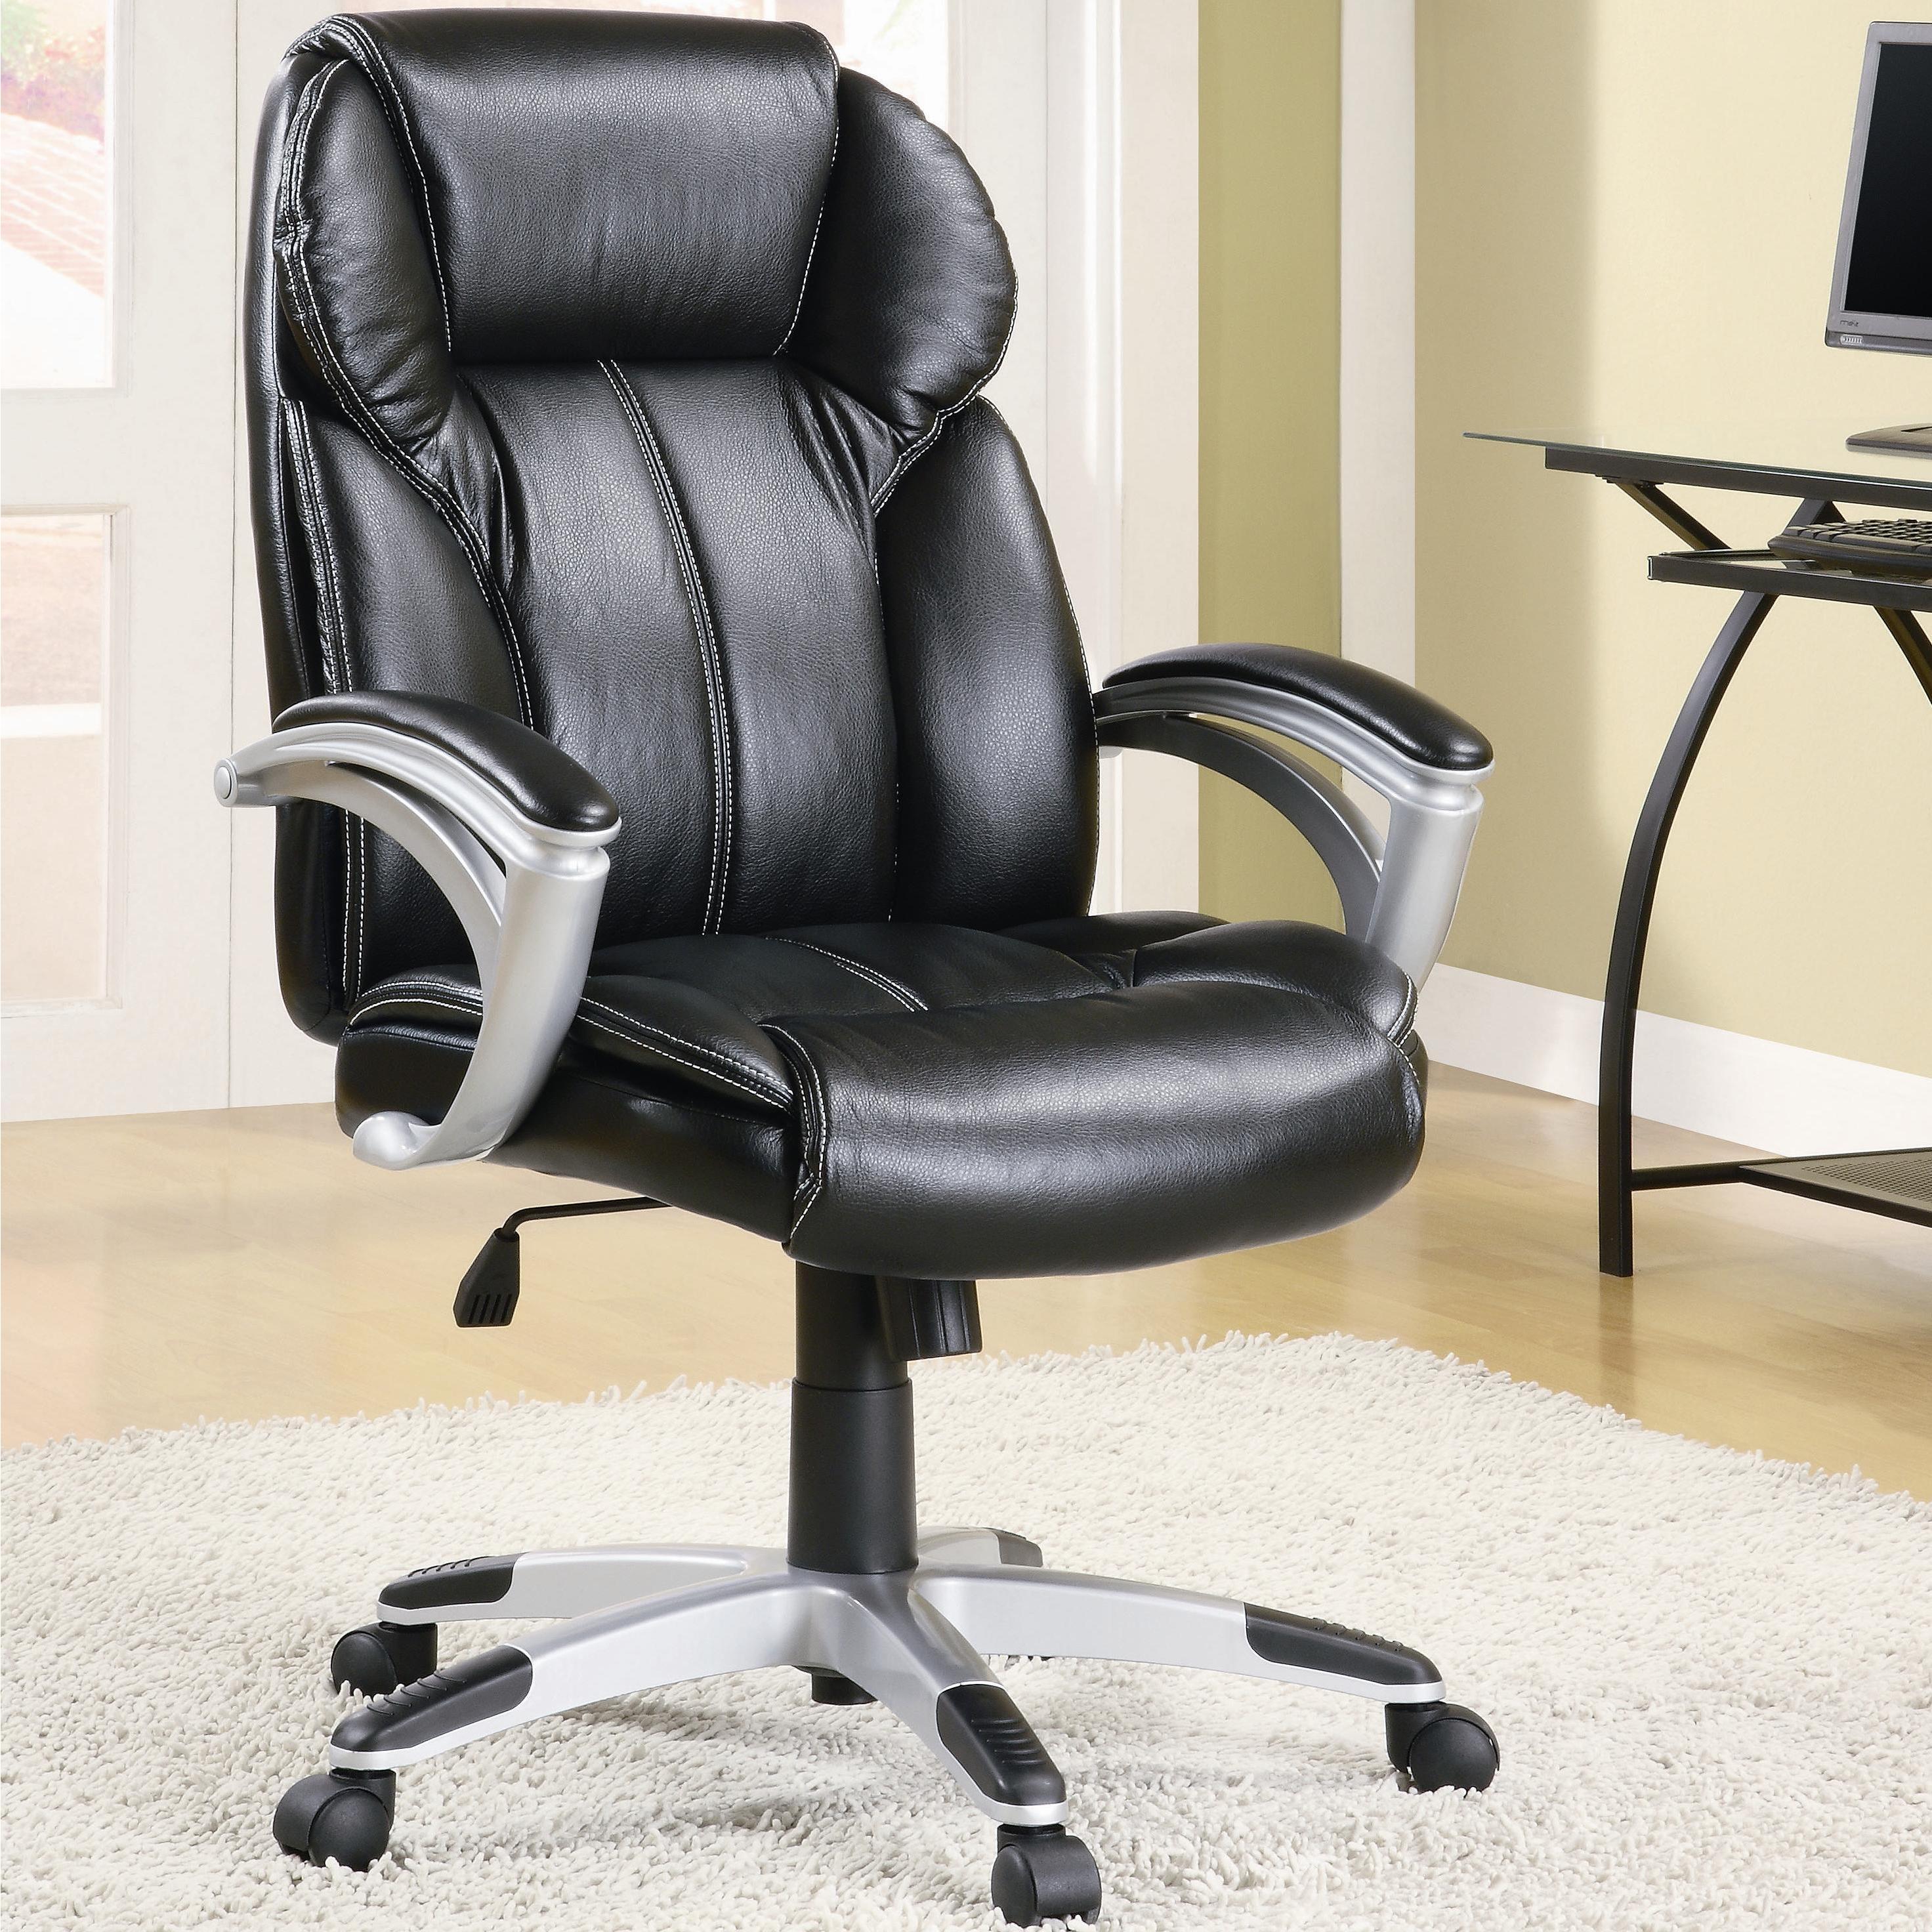 Executive Ergonomic Plush Office Chair With Padded Arms C15d2d9e 1024 42af 9318 3e62edc61e87 